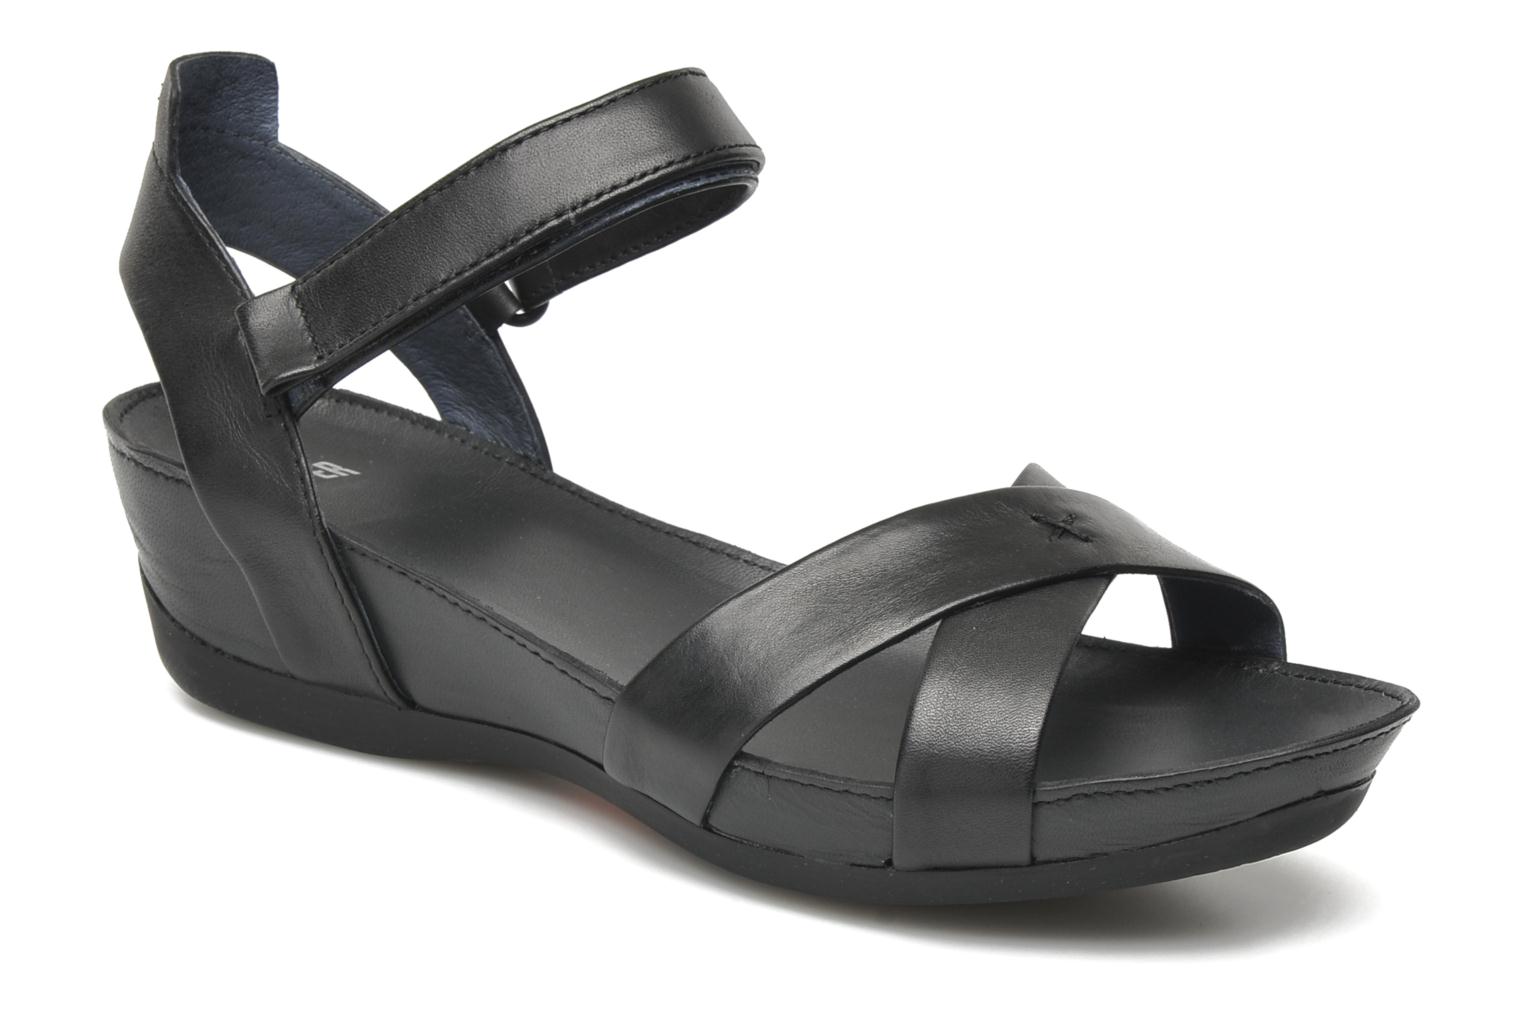 Camper Micro 21584 Sandals in Black at Sarenza.co.uk (167679)